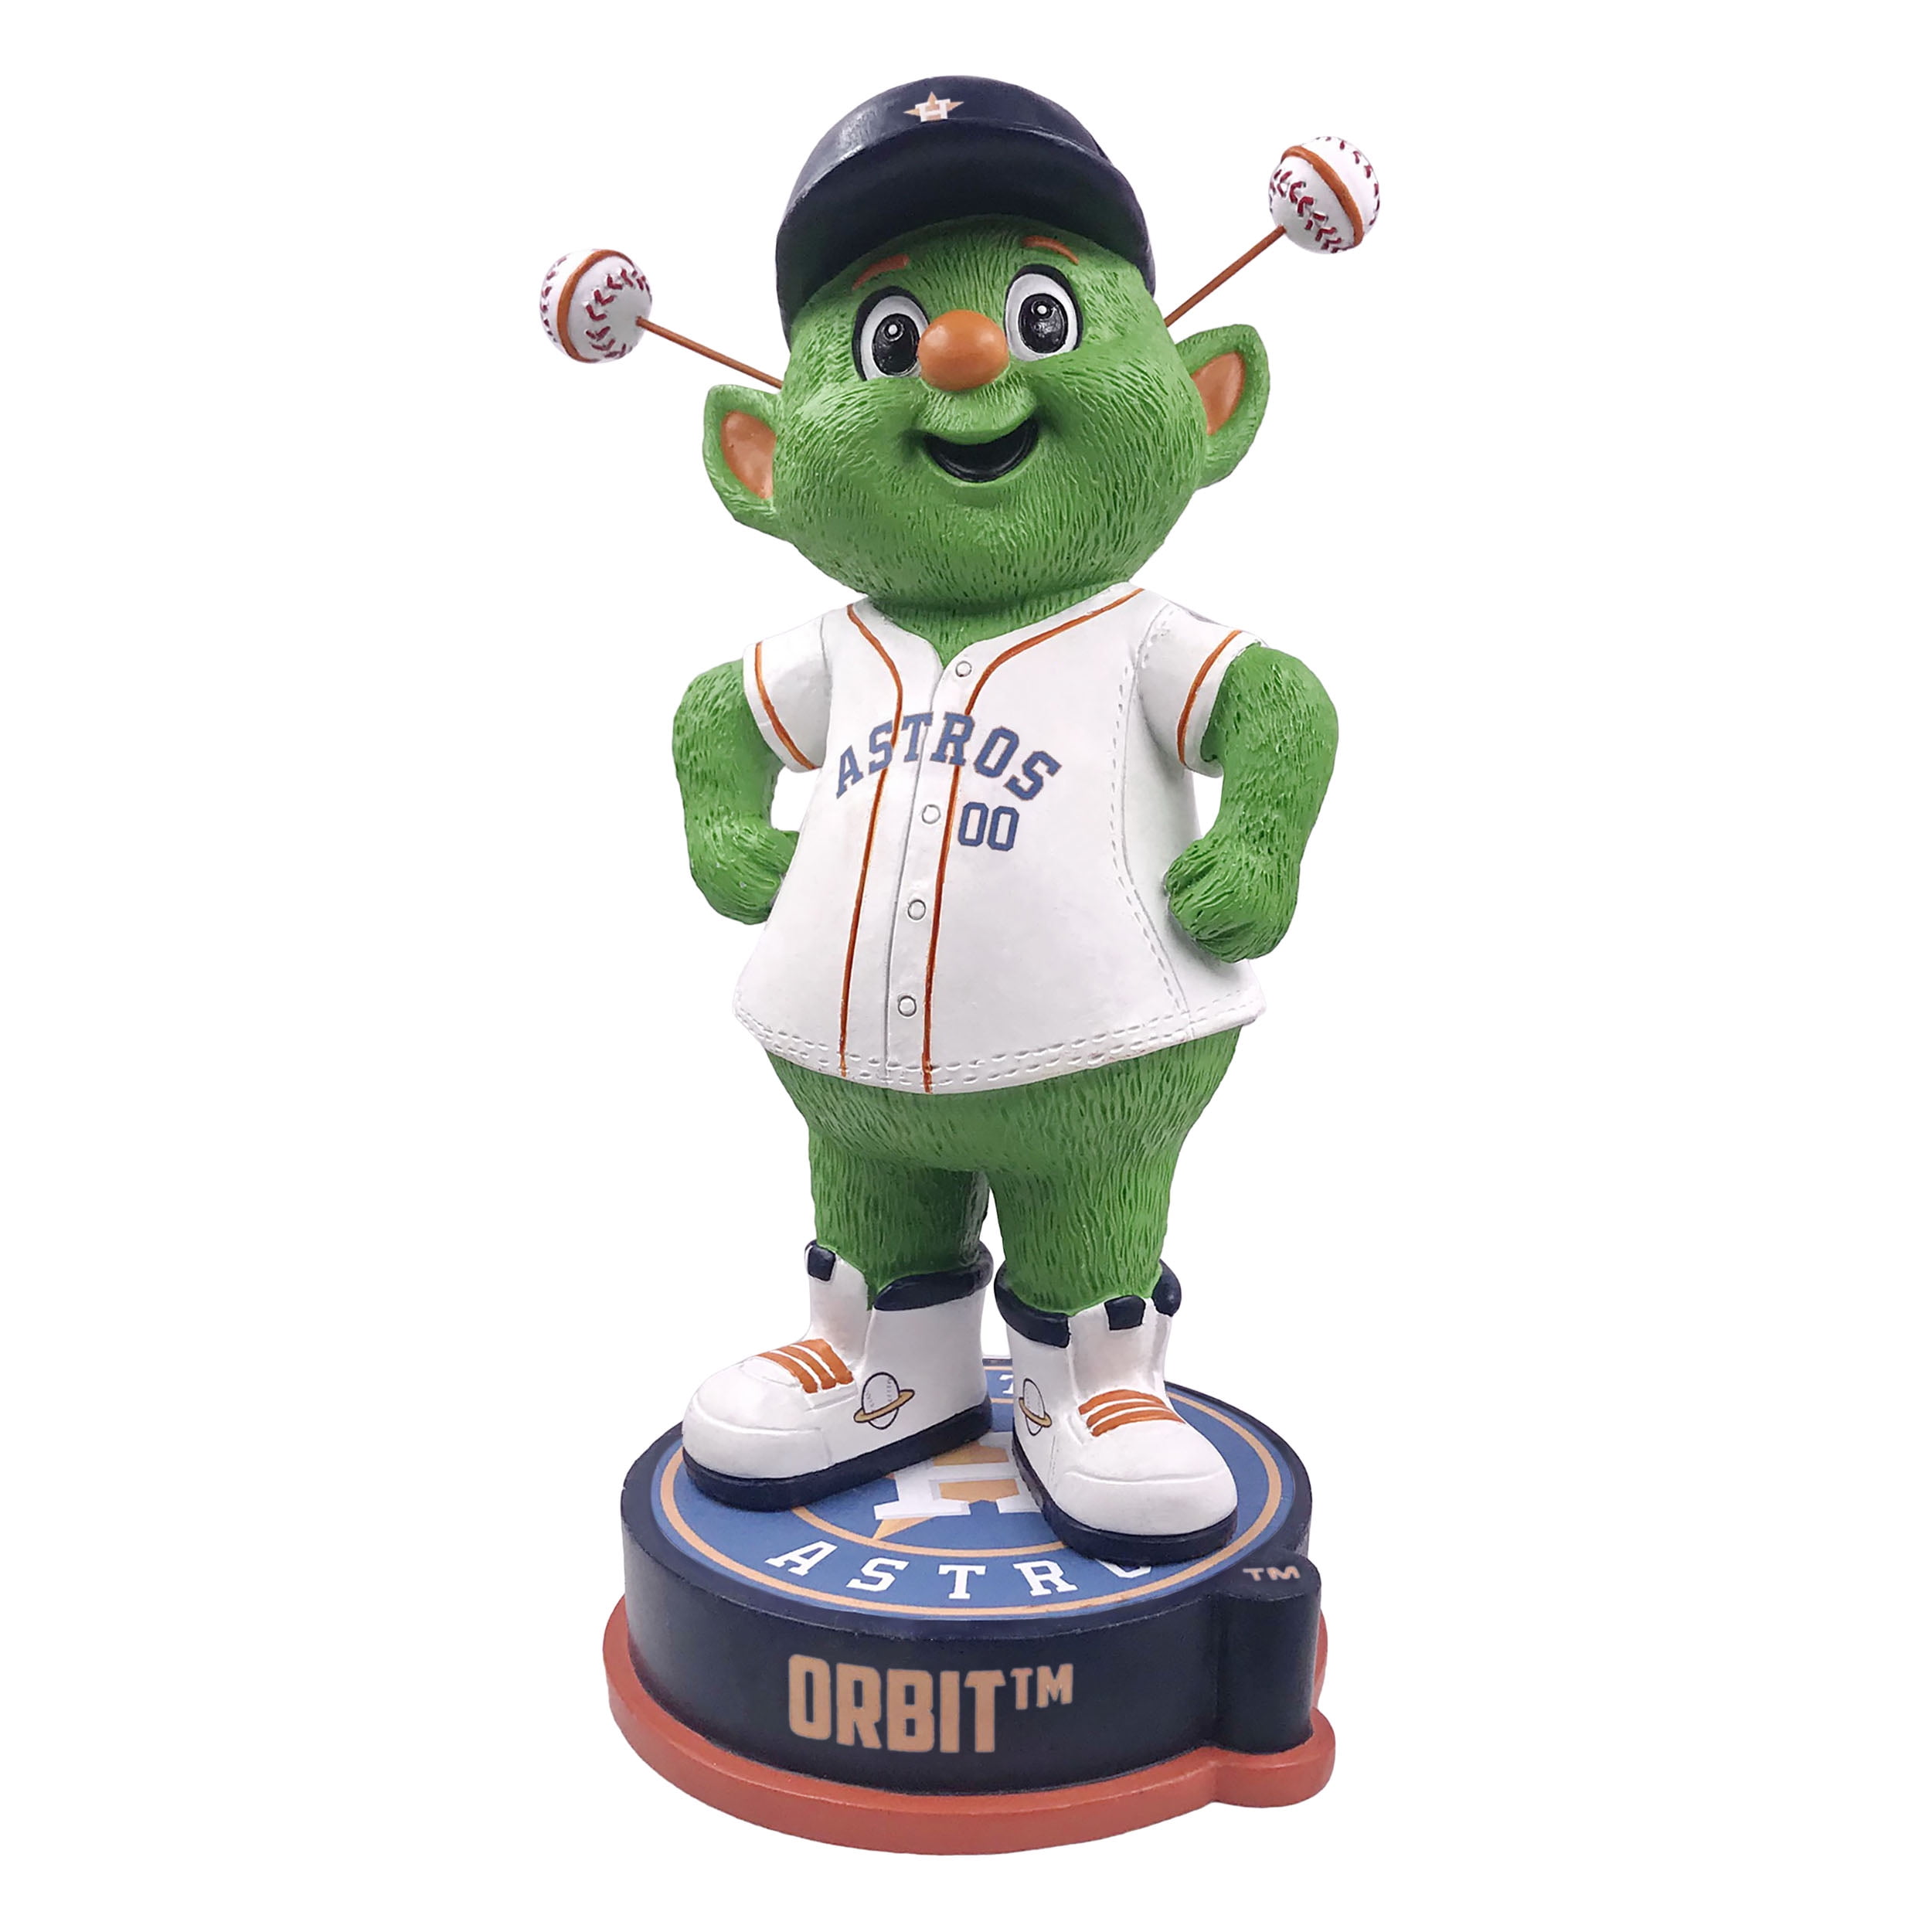 Astros' mascot Orbit releases a children's book for little Astros fans